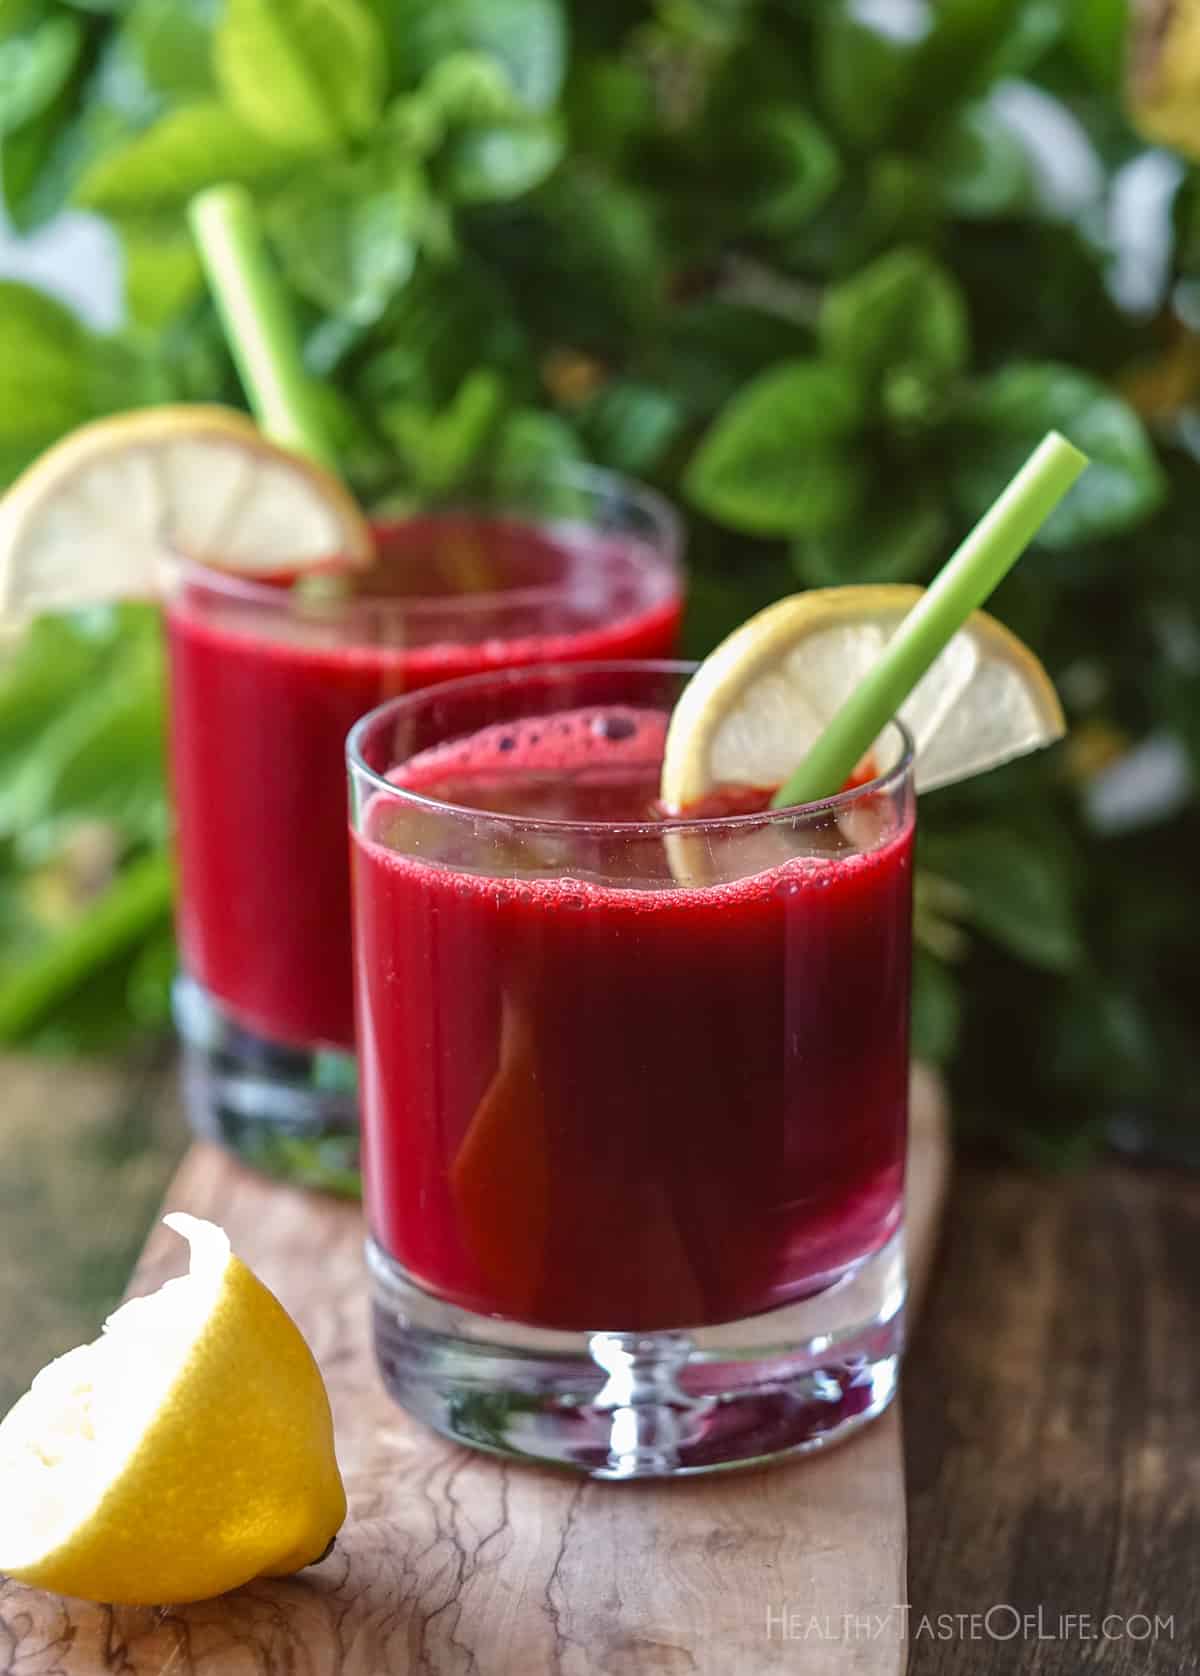 beet juice benefits in a glass of fresh juice